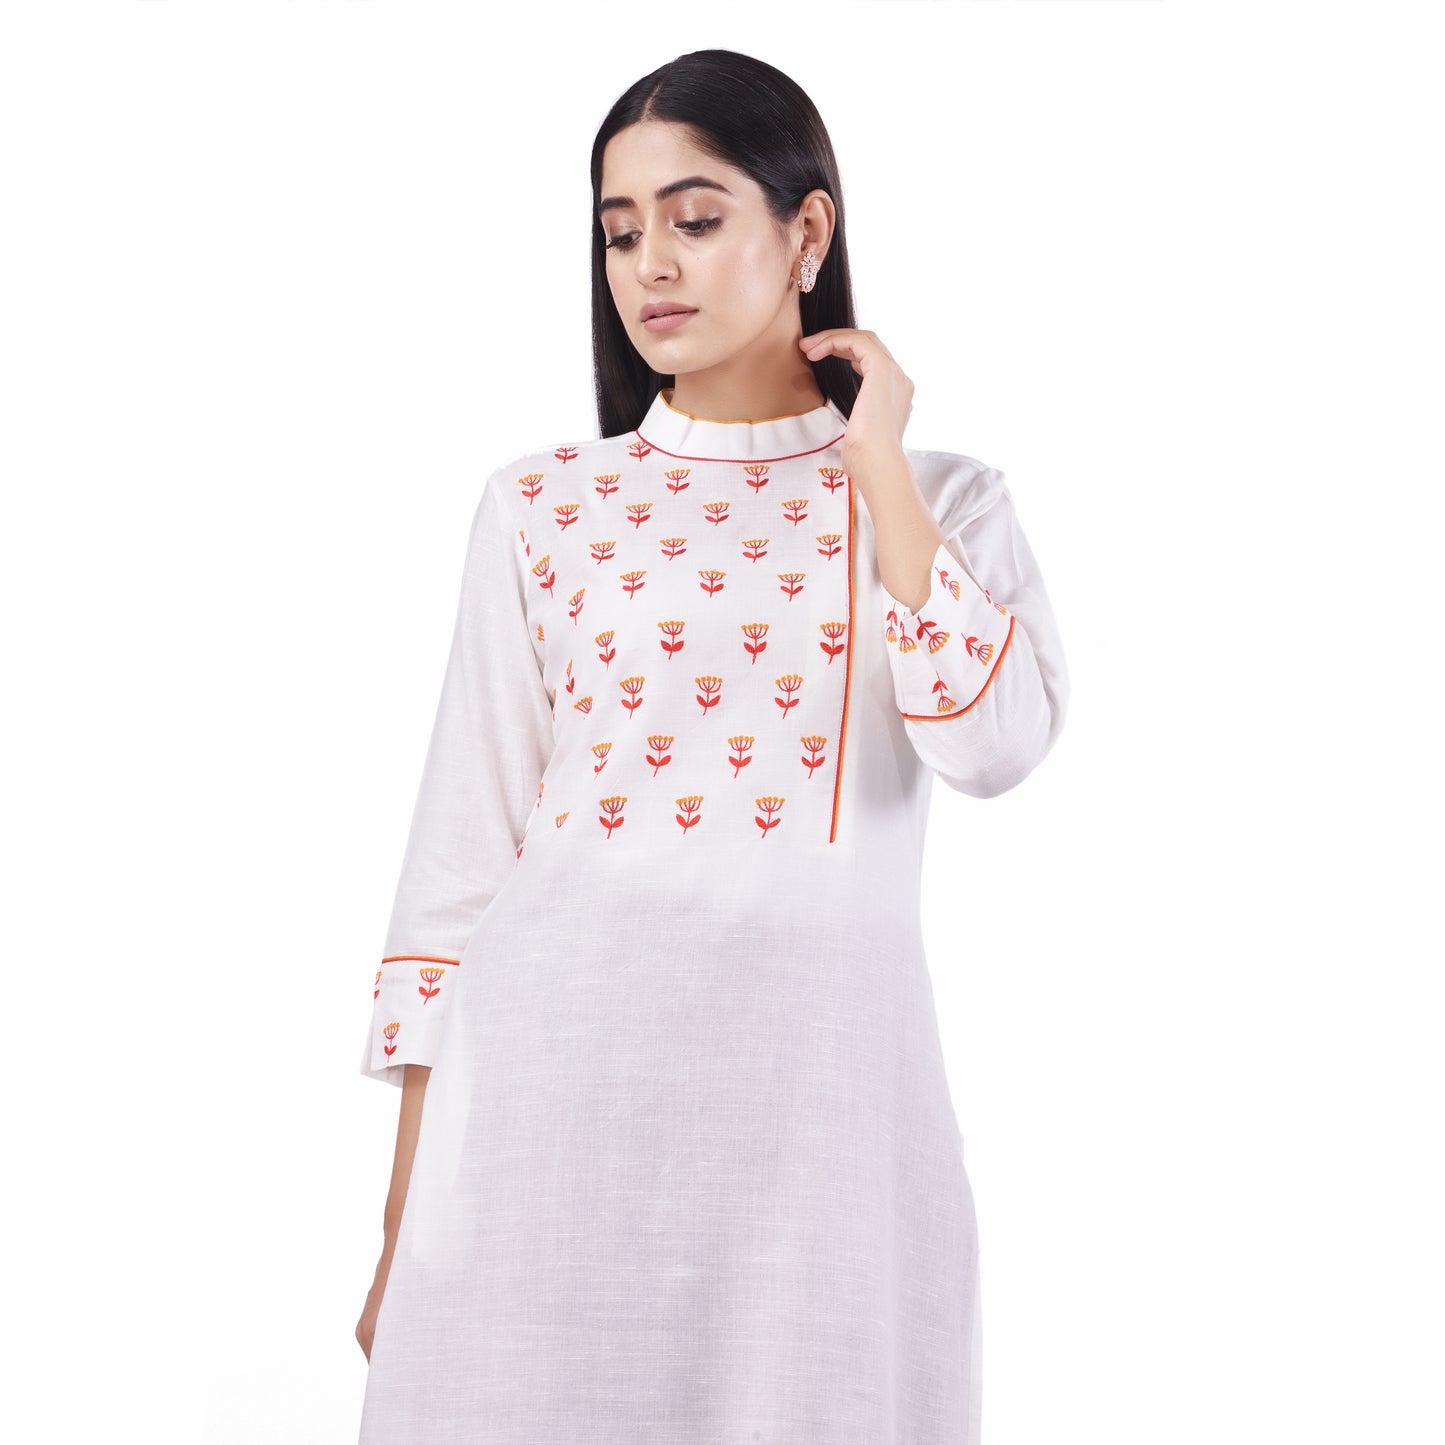 Nakshi White Cotton Linen Floral Embroidery Side Button Women's Straight Kurti